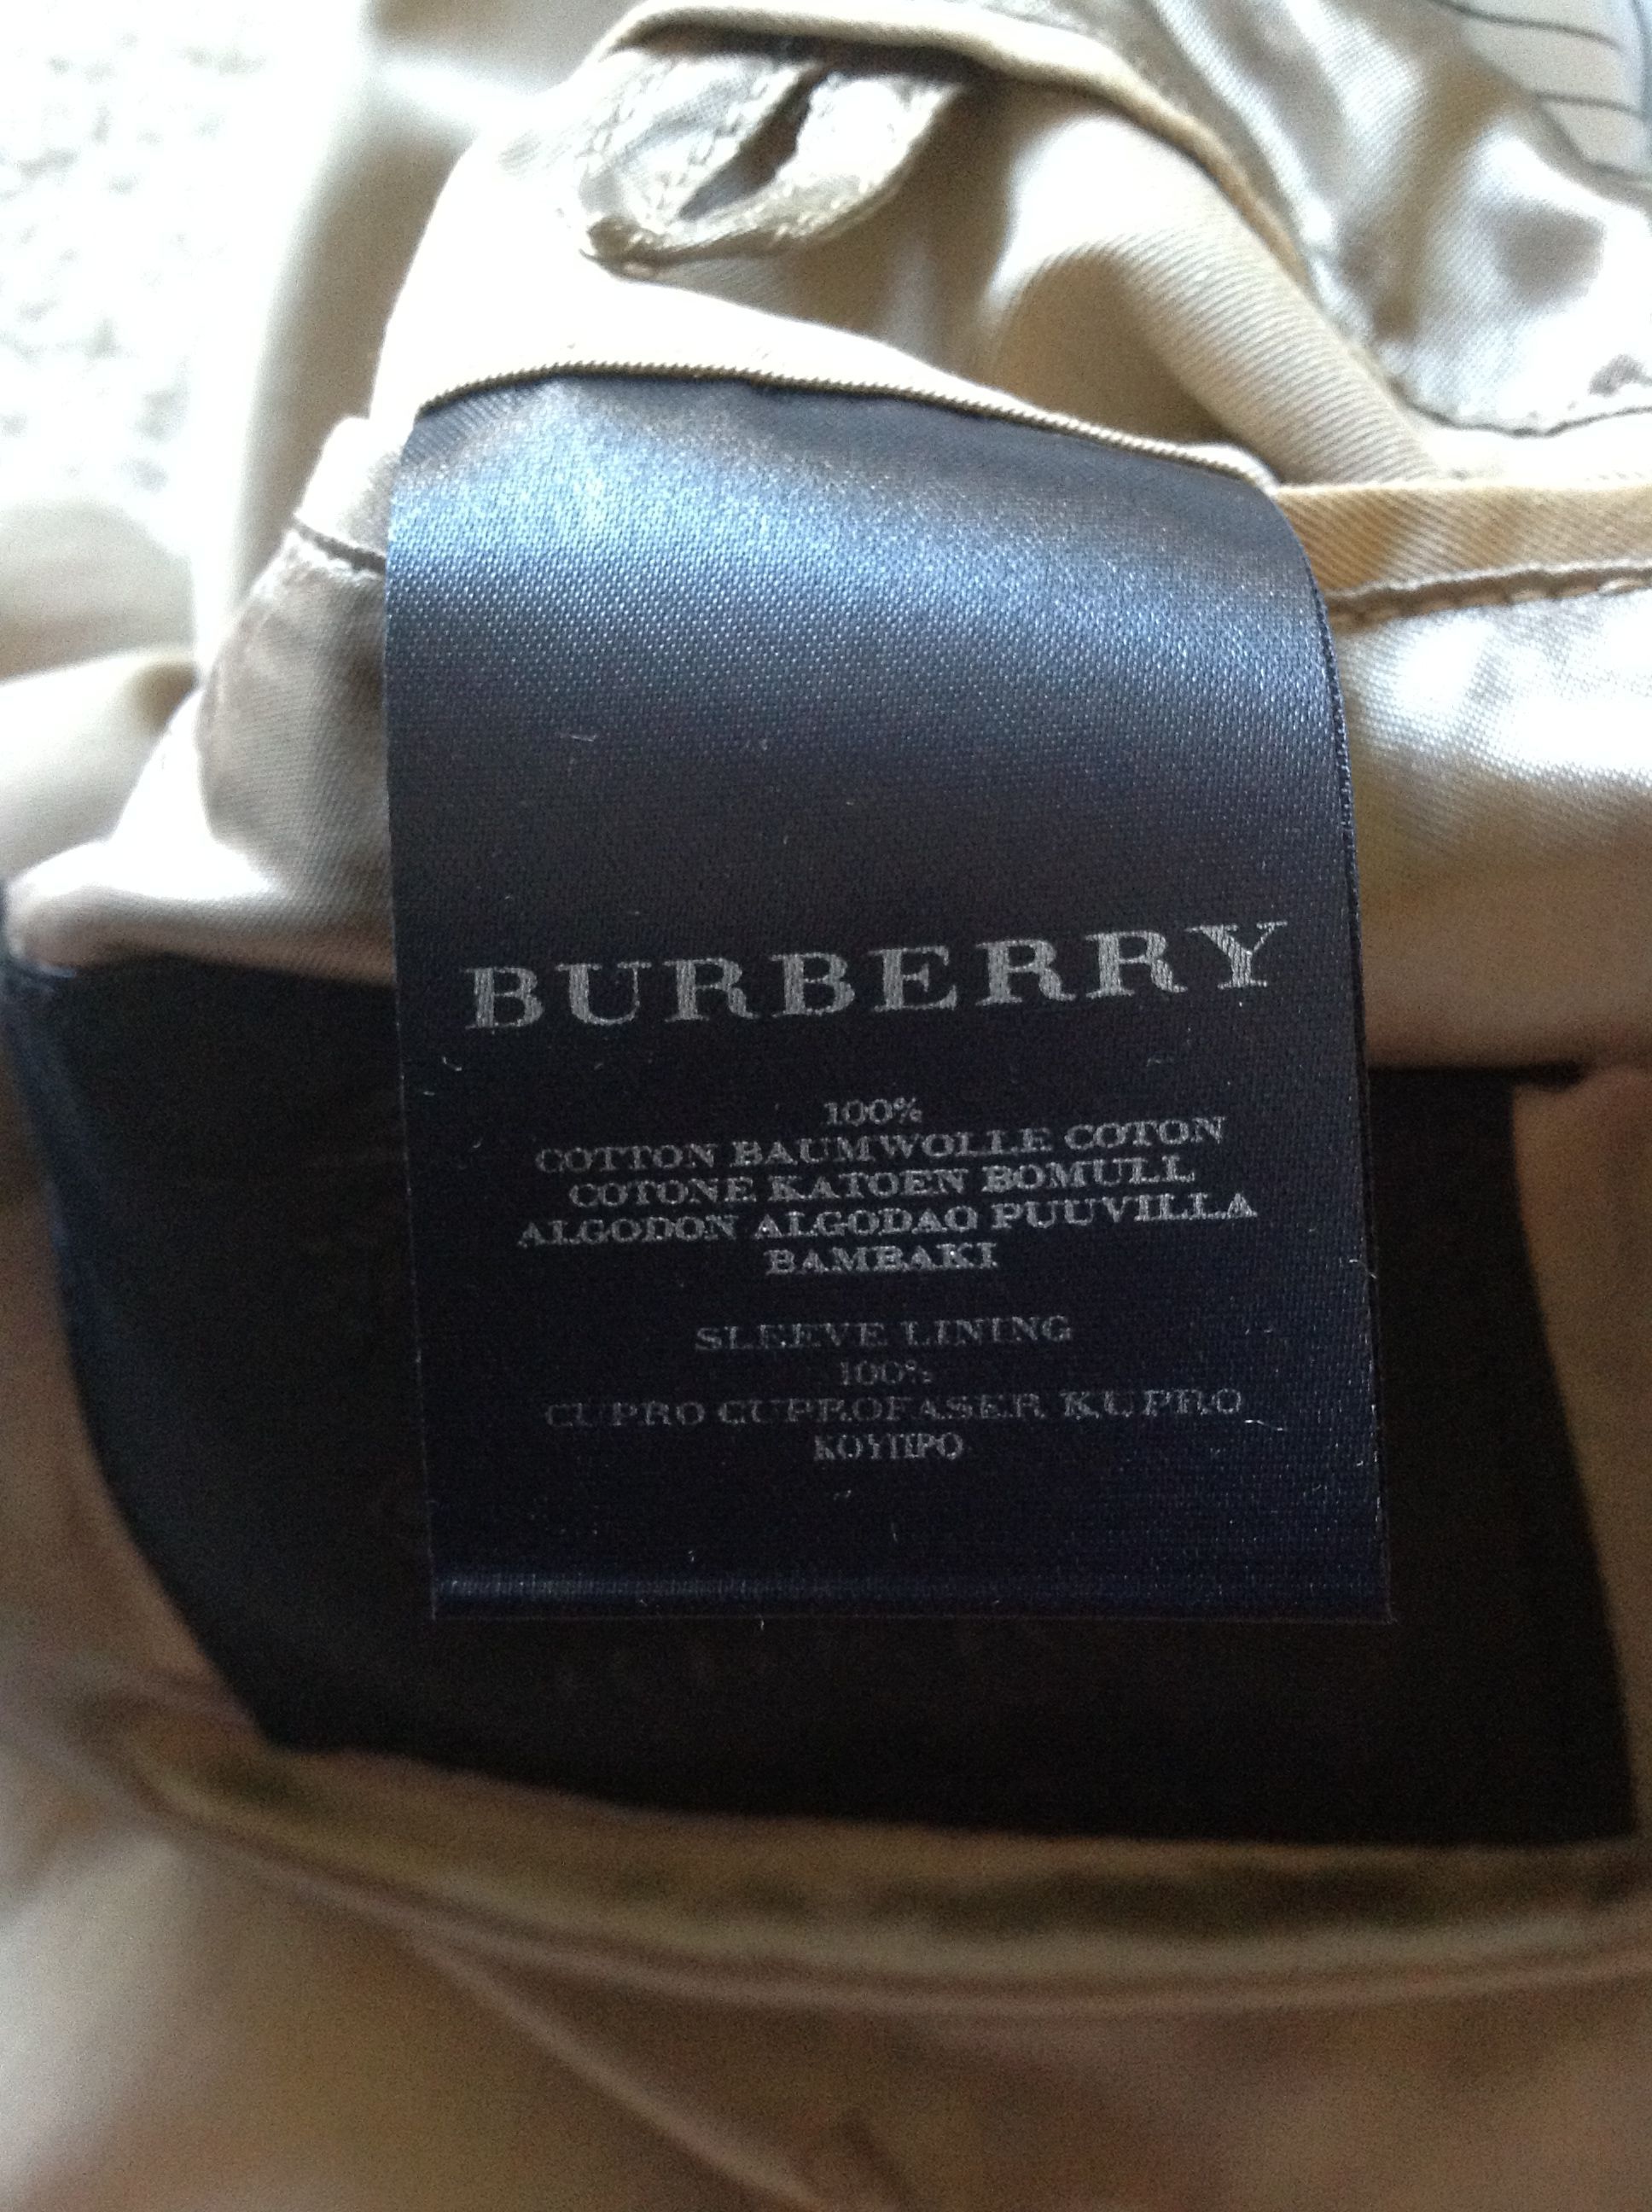 burberry inside label